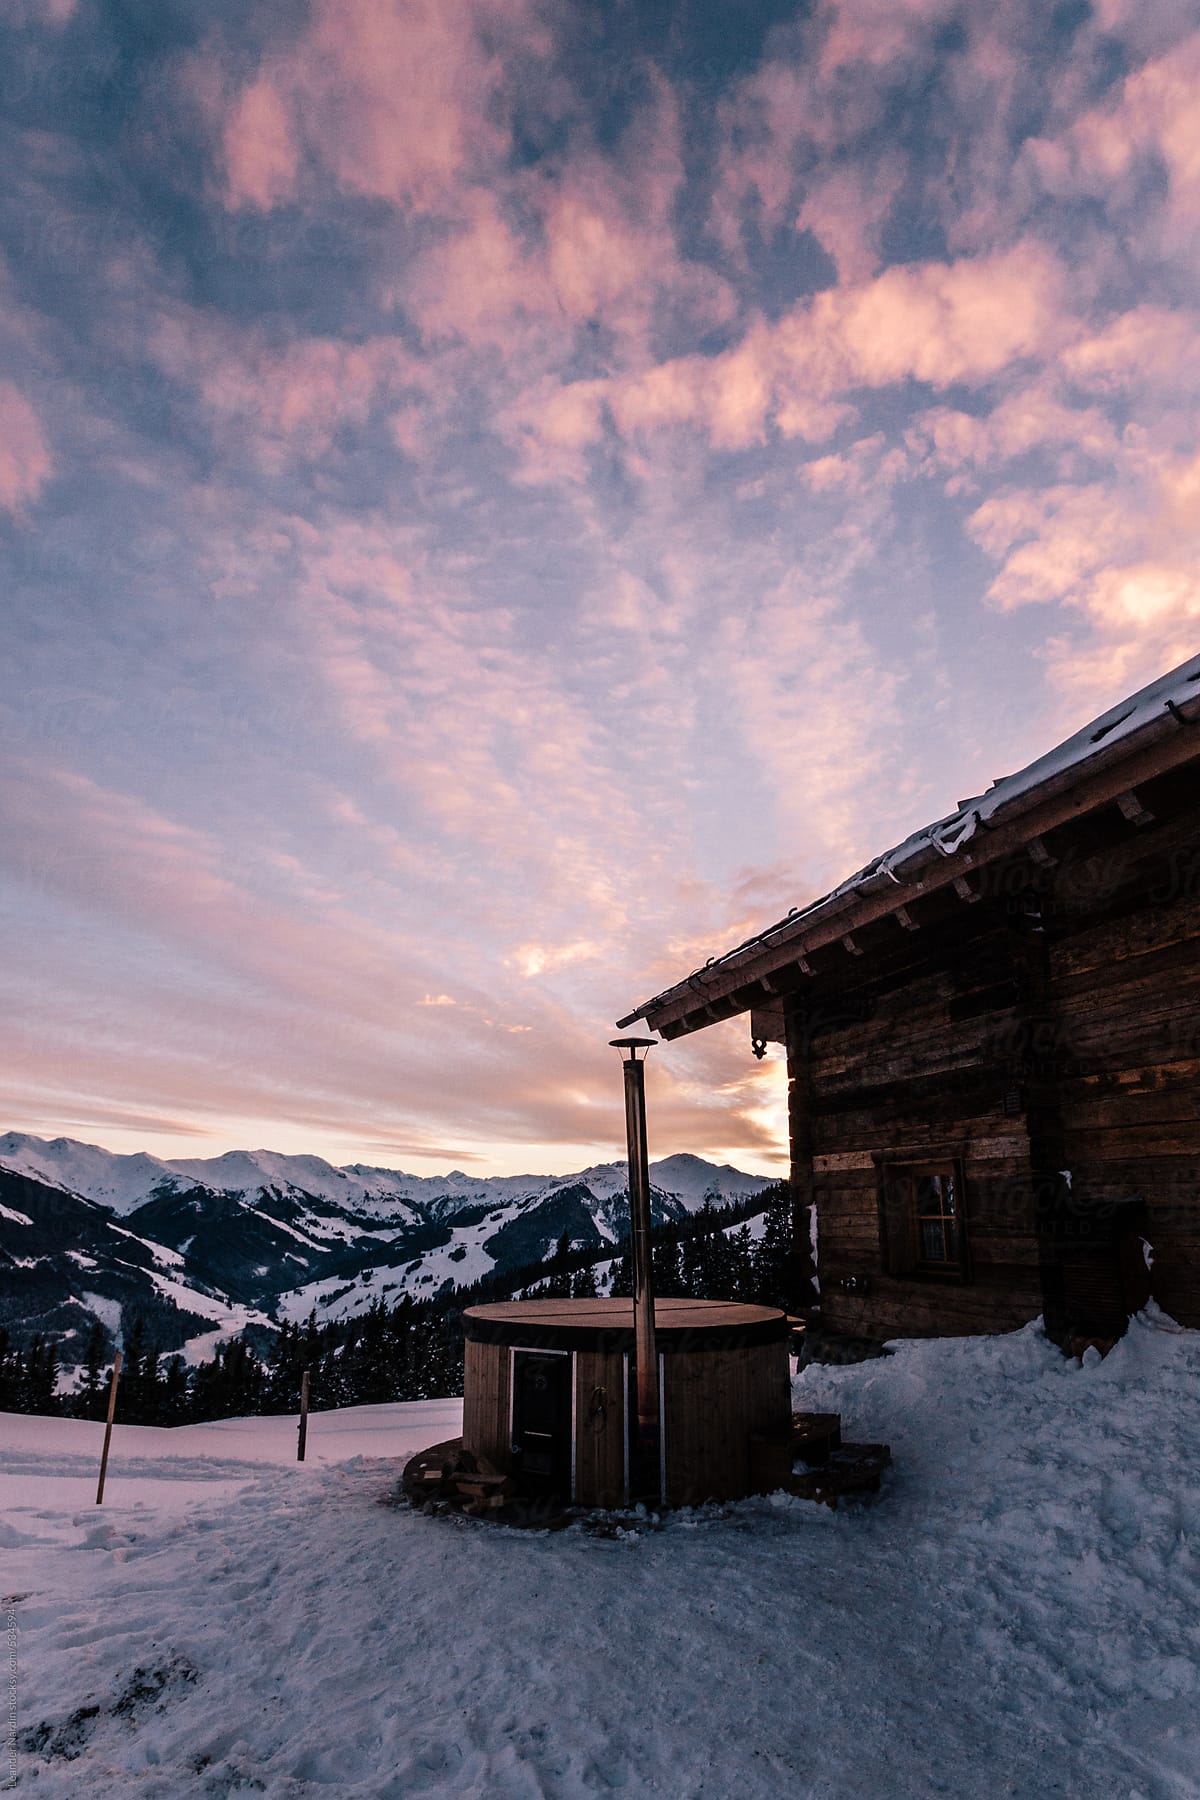 wooden alpine cabin with jacuzzi in alpine winter landscape